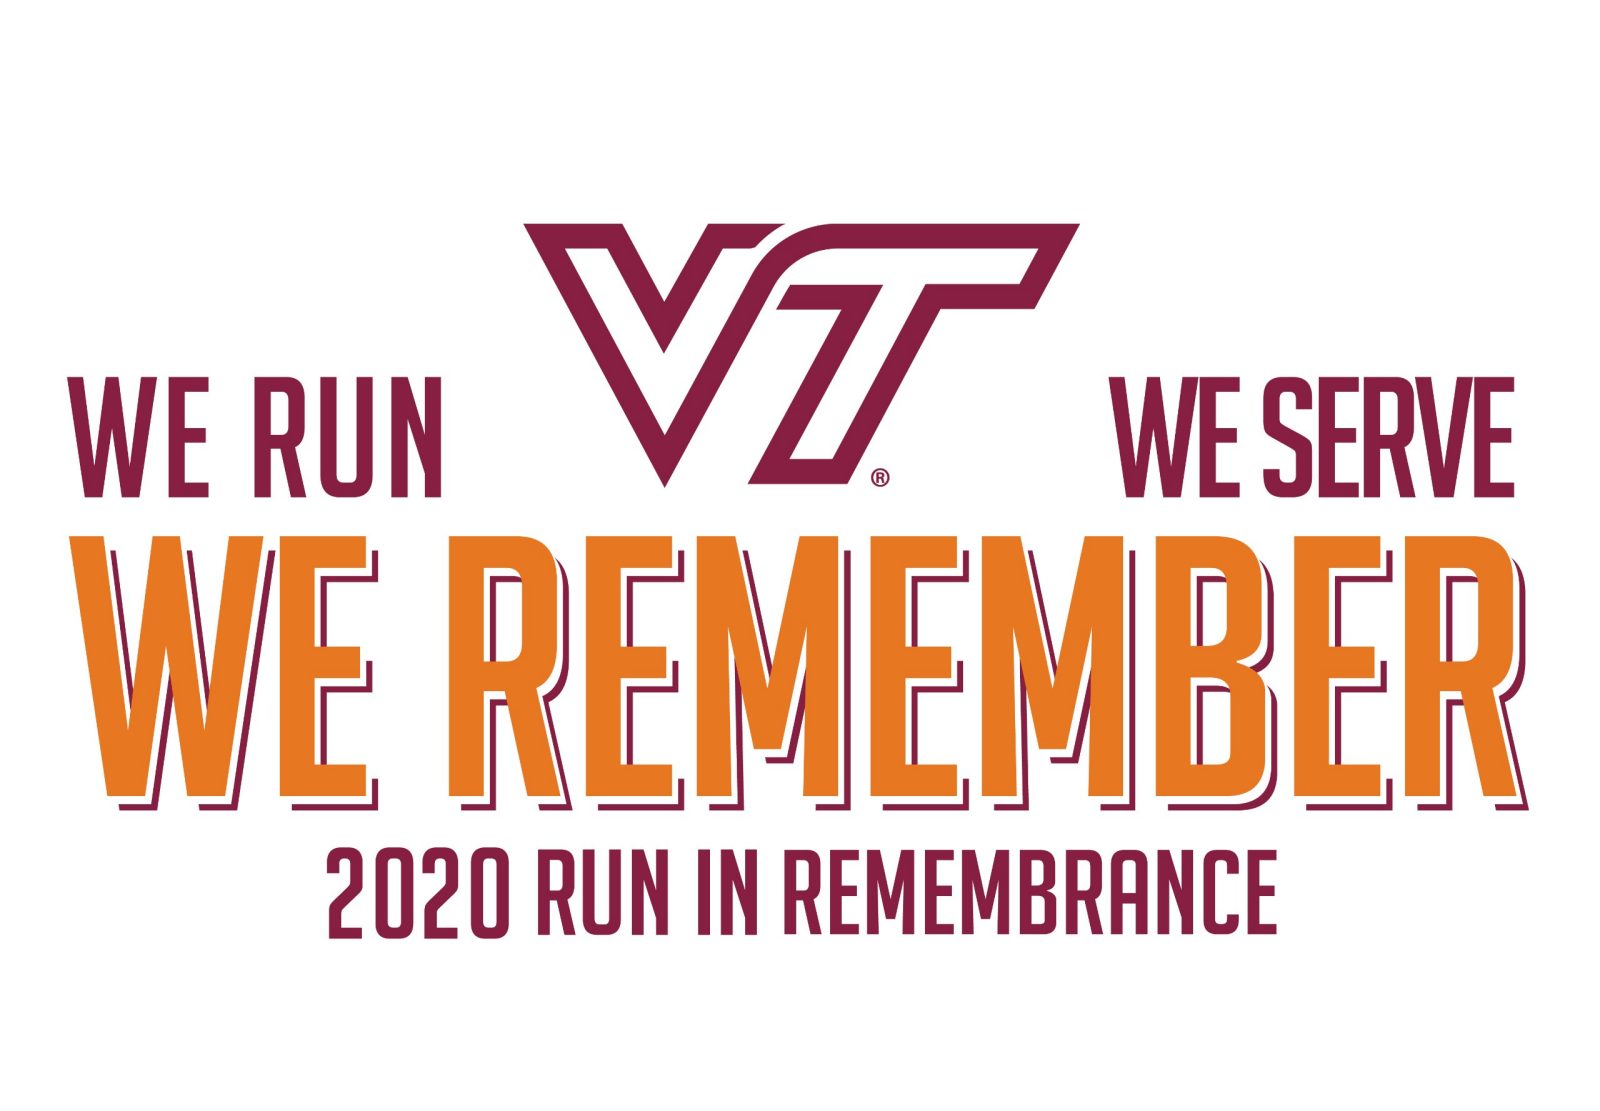 2020 Virtual Run in Remembrance announced for April 16-18